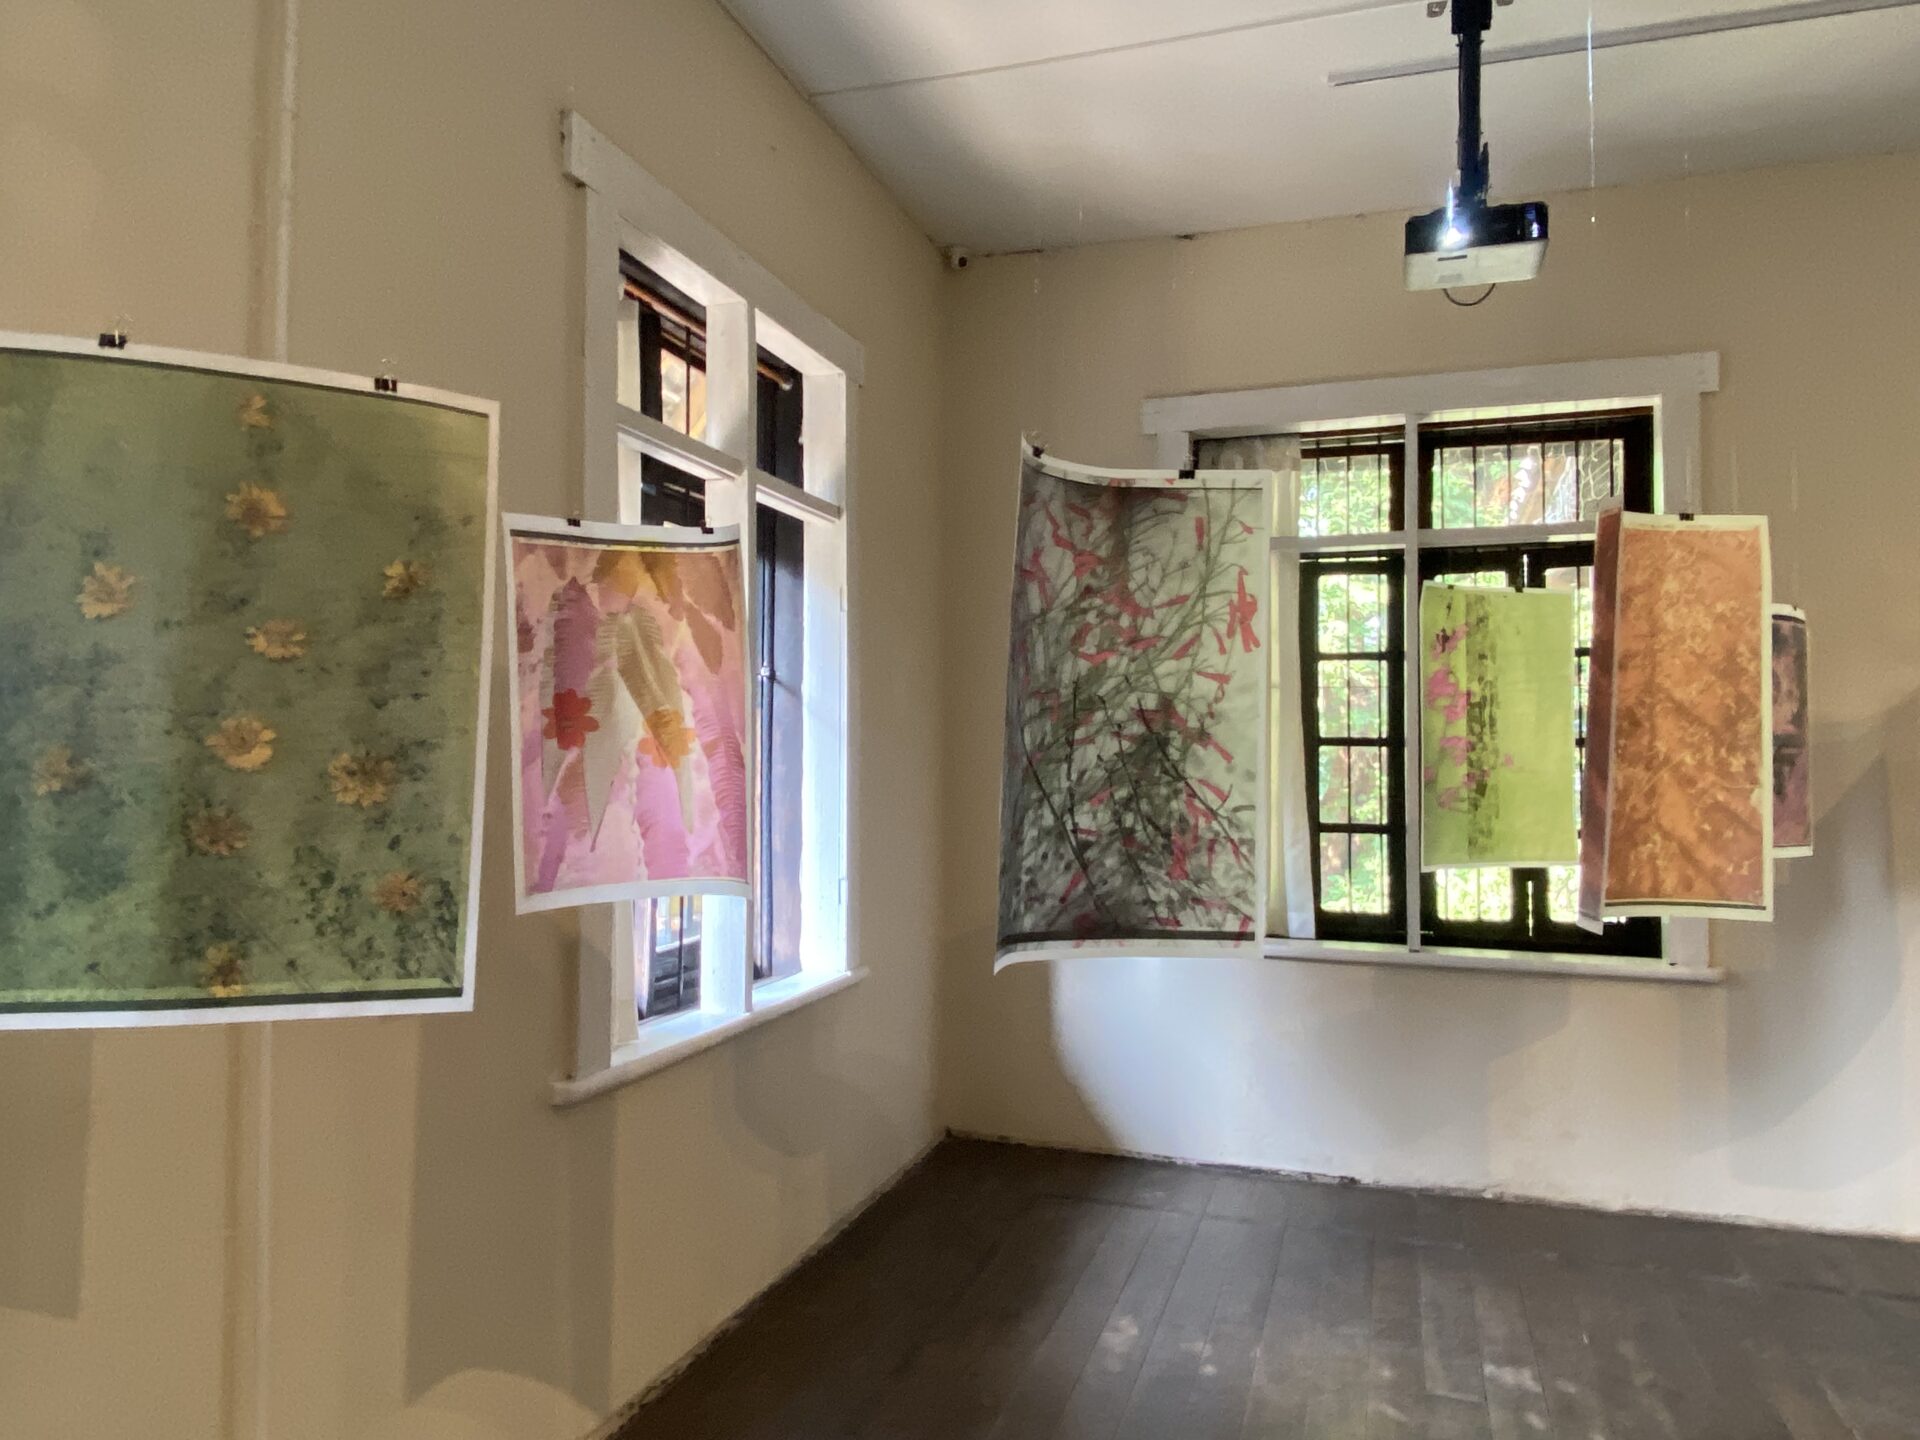 Art exhibitions at Singhaklai House (Photo: Anya C.)